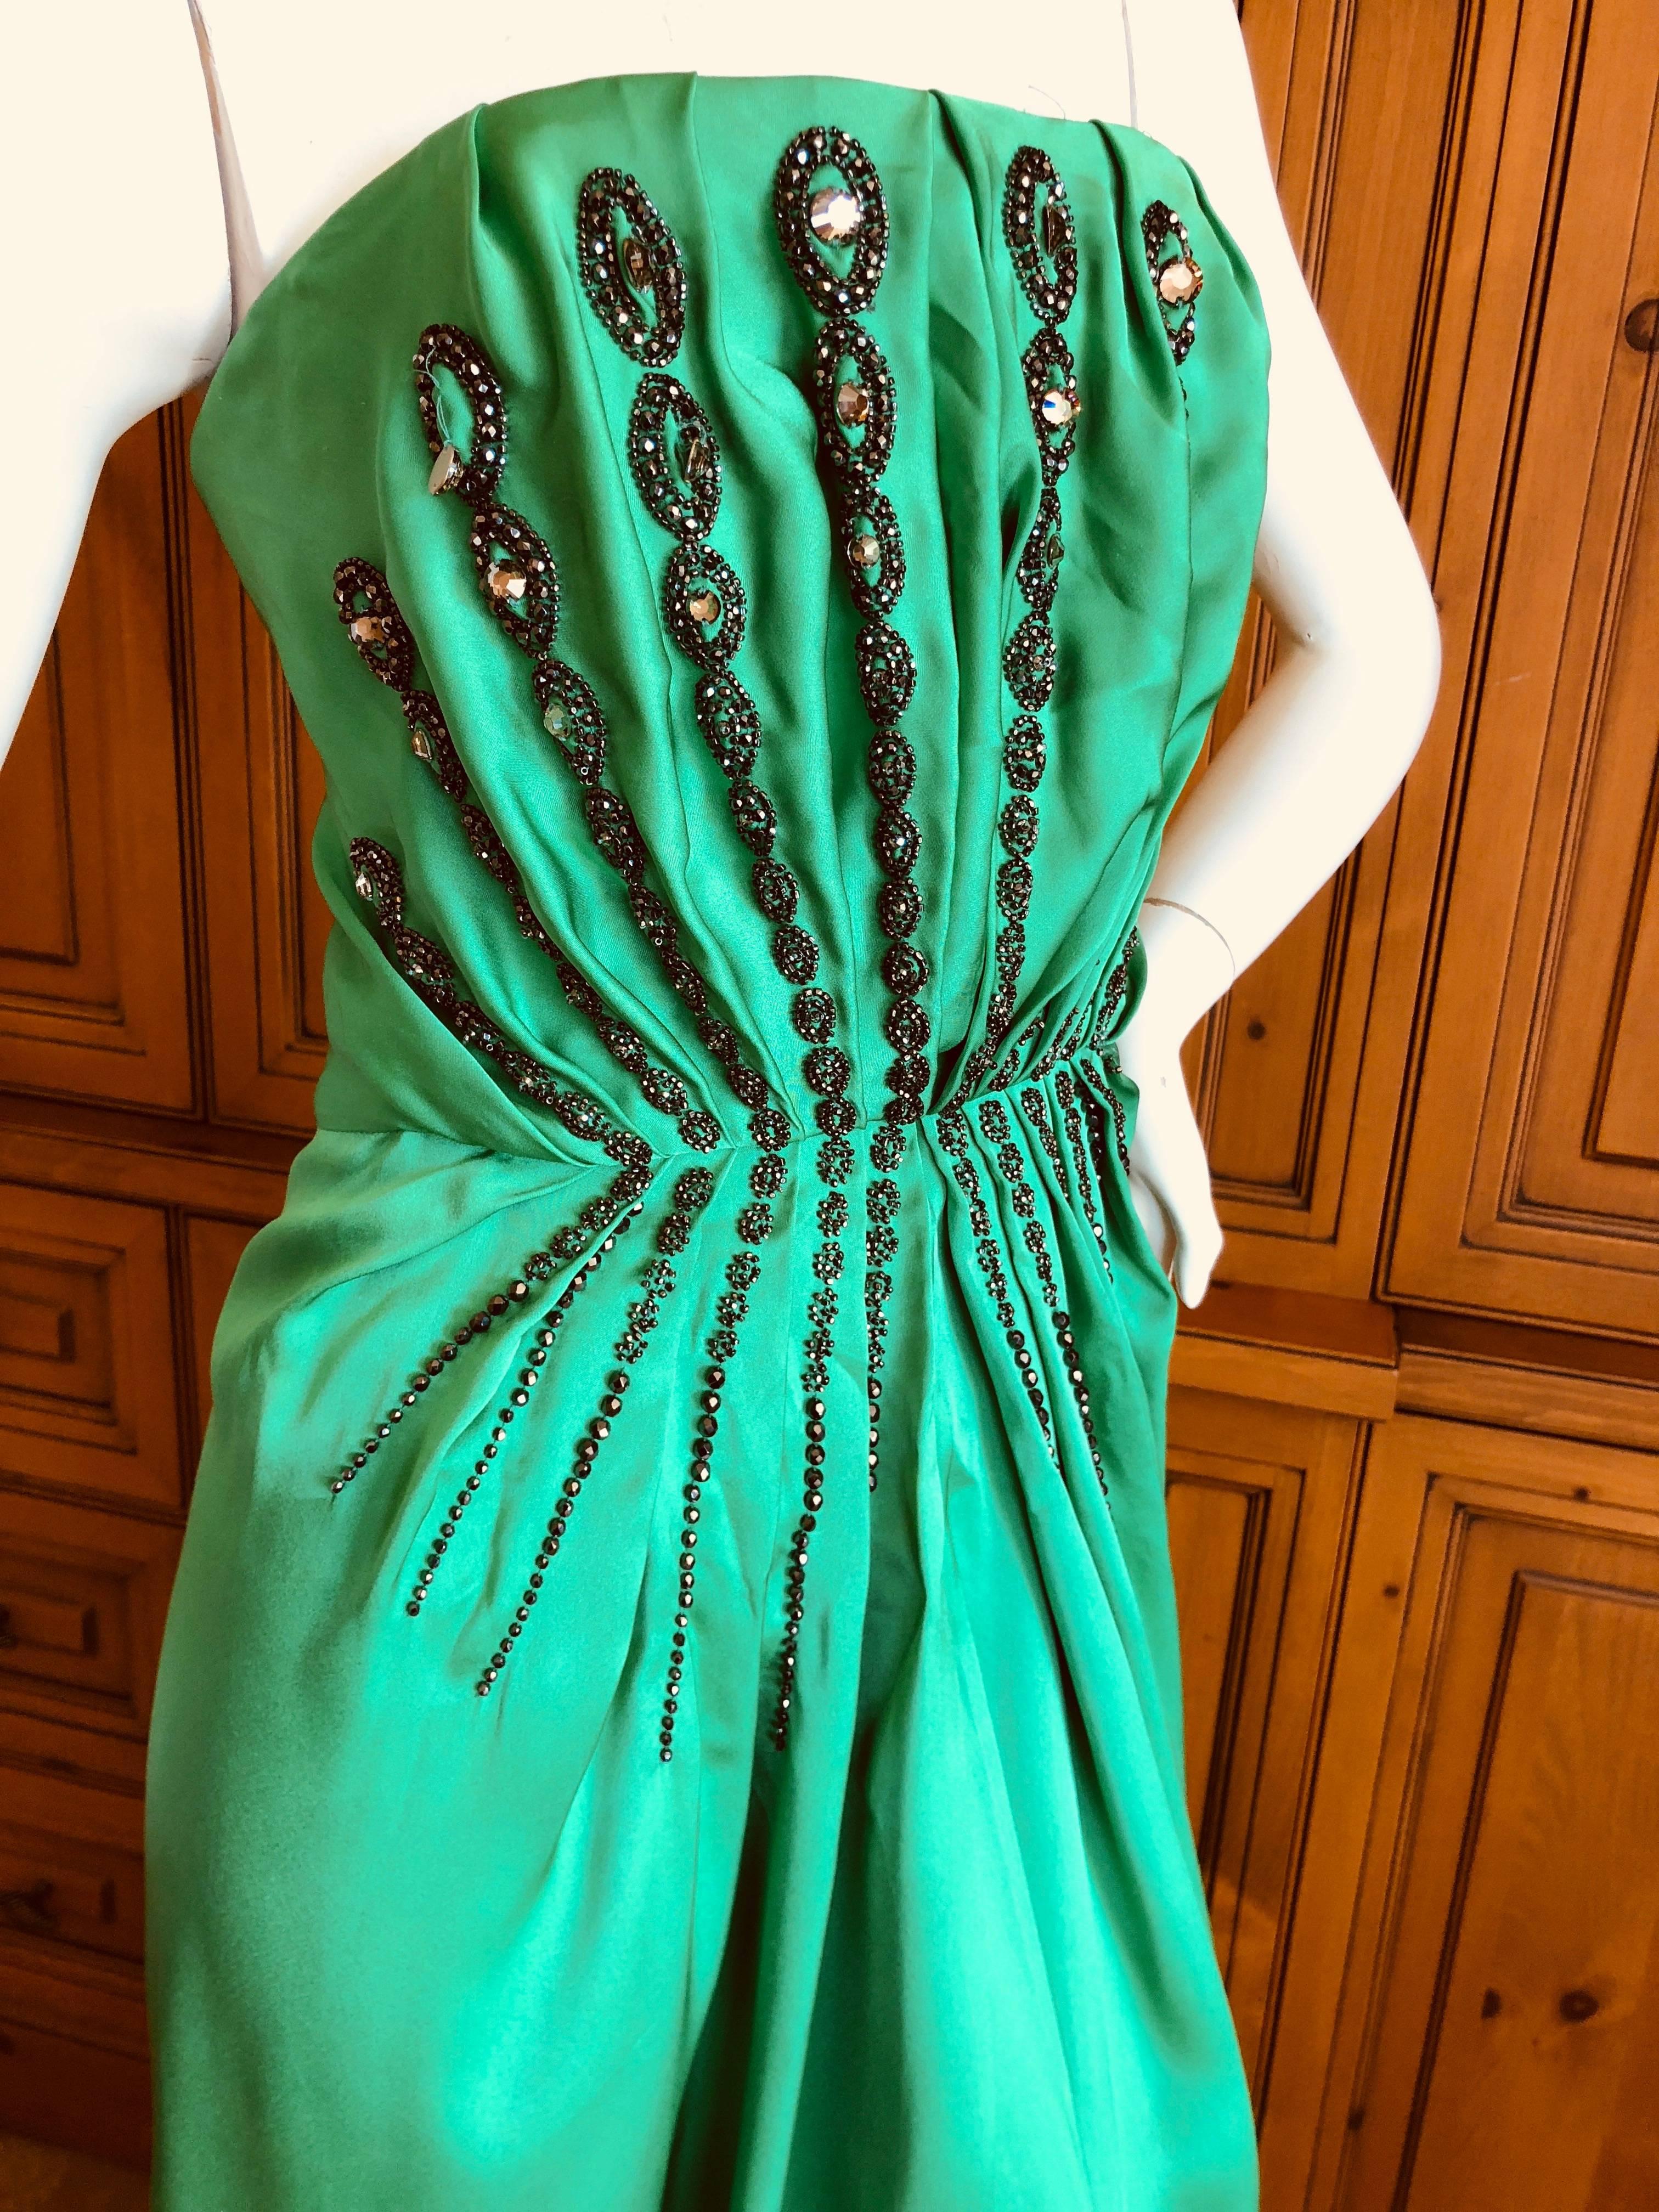 Yves Saint Laurent Edition Soir Embellished Green Silk Strapless Dress New Tags 1